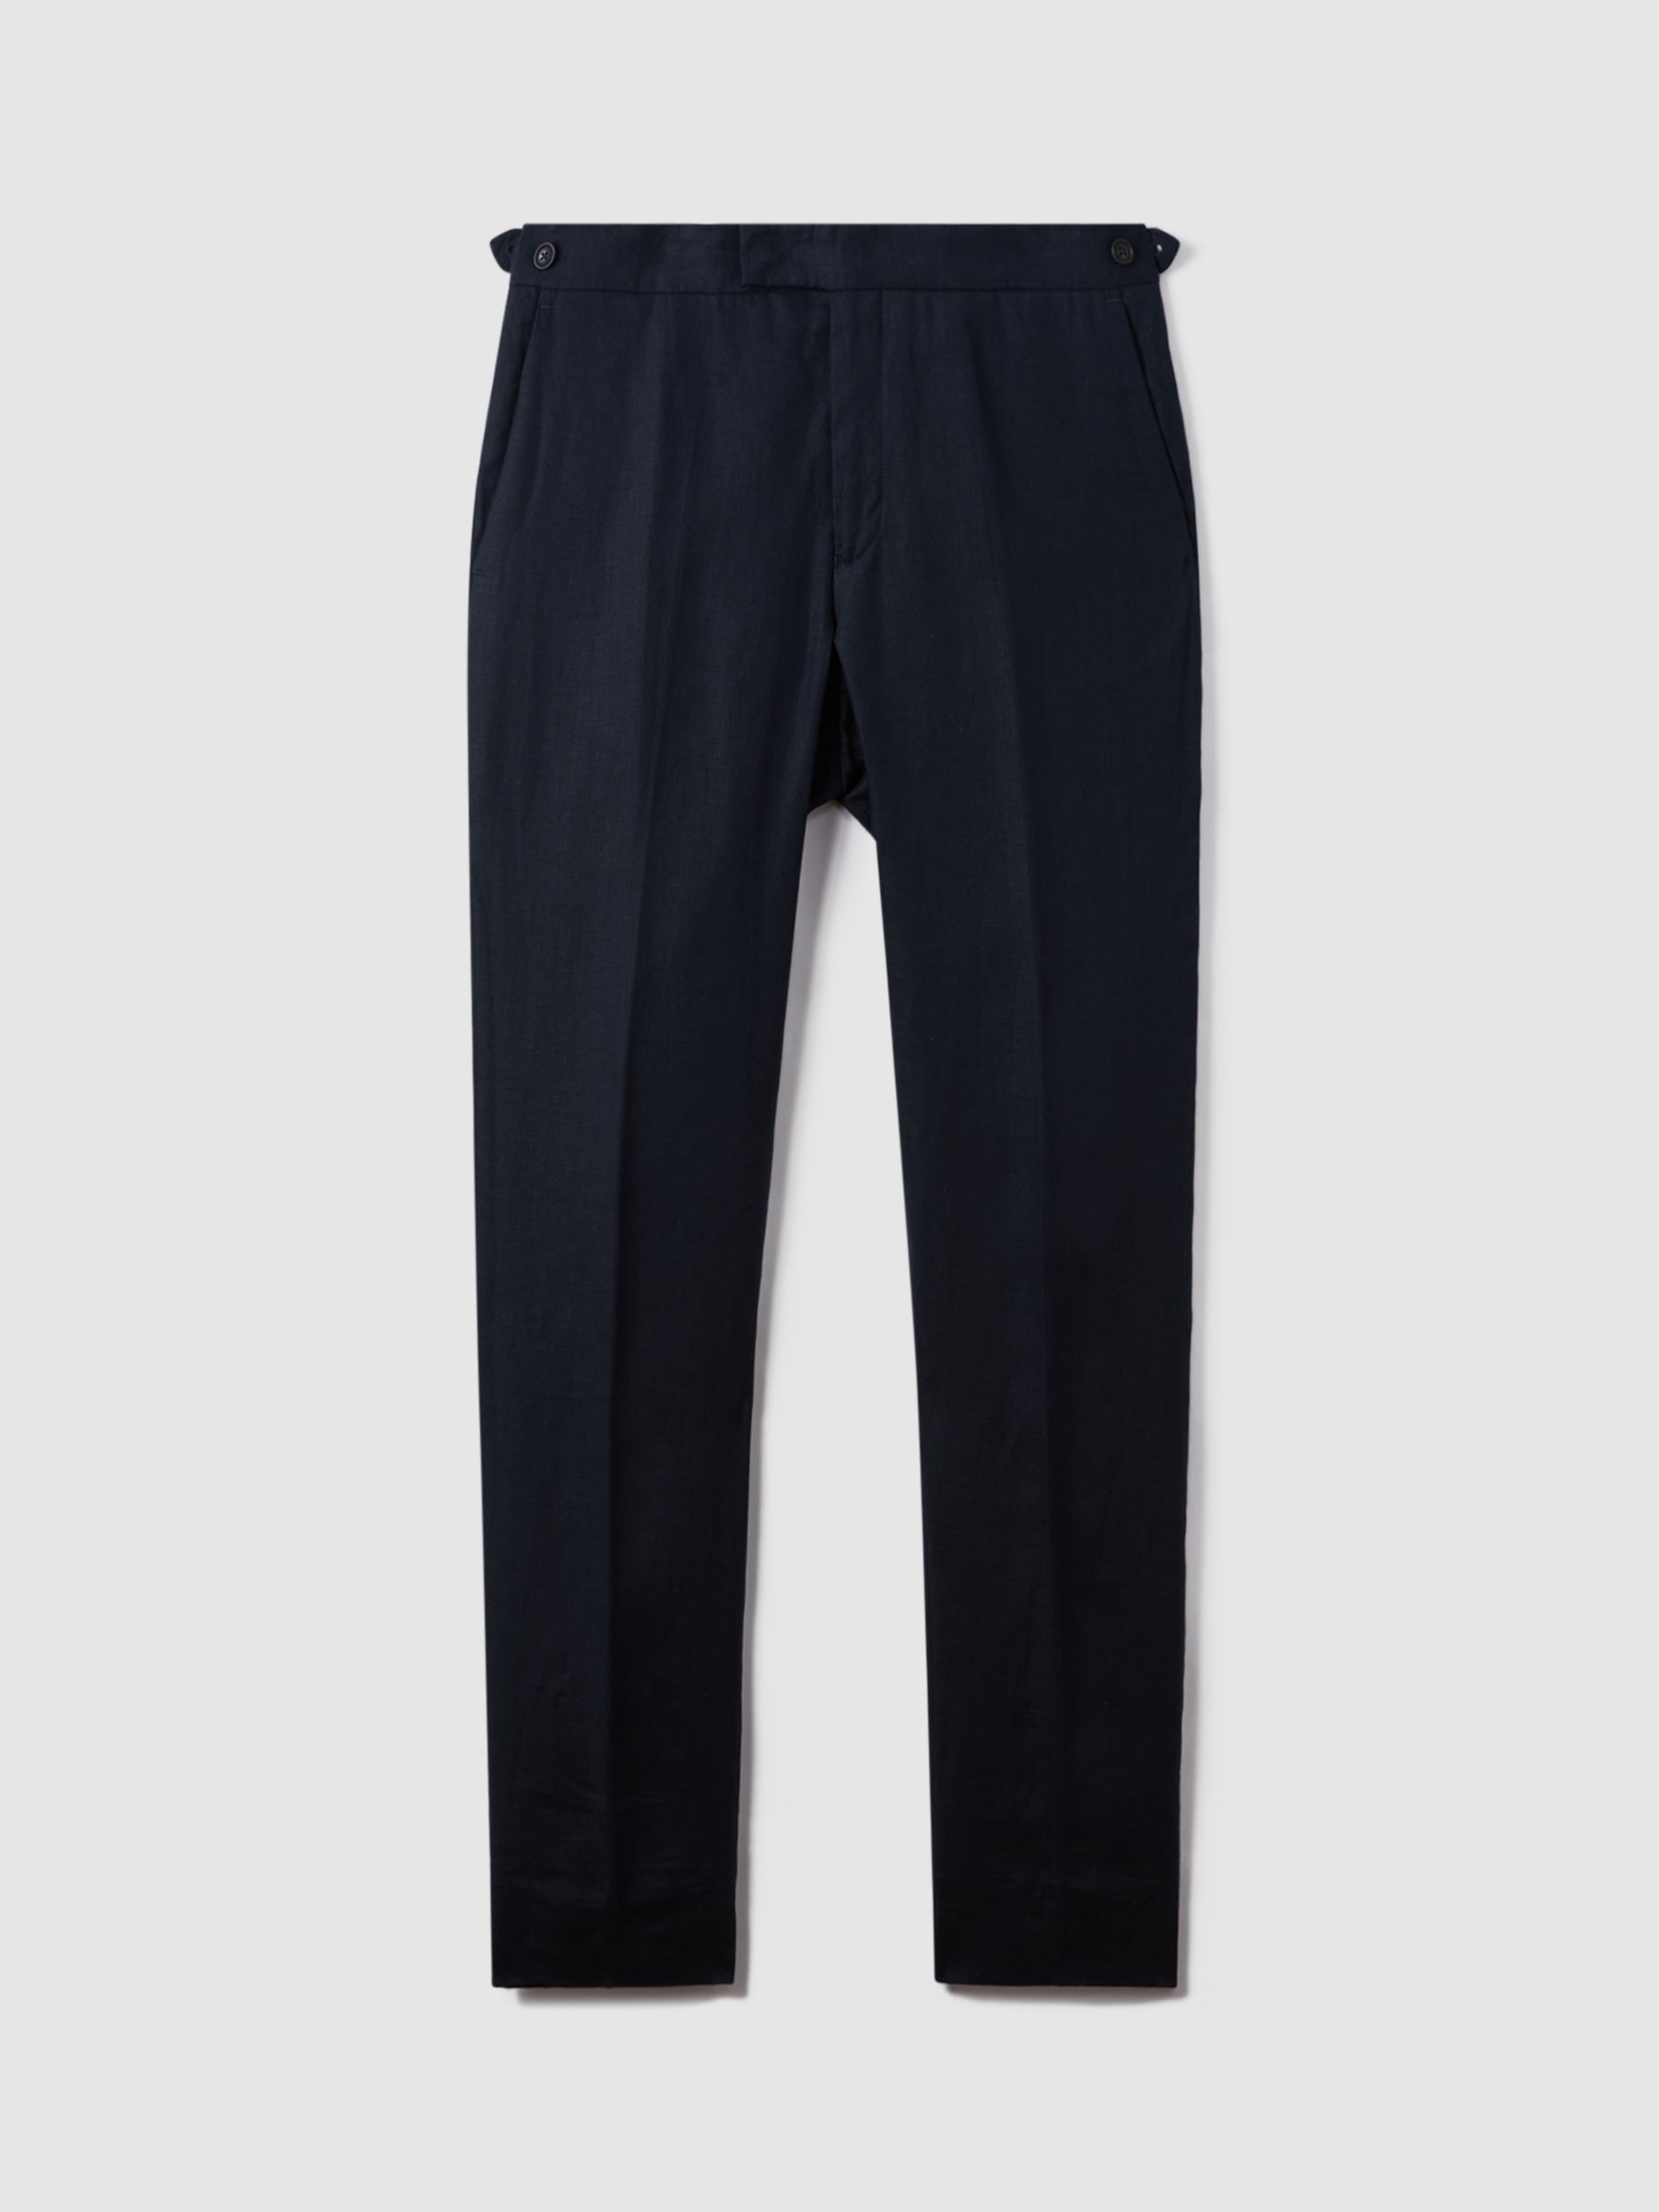 Reiss Kin Linen Slim Fit Mixer Trousers, Navy, 28R